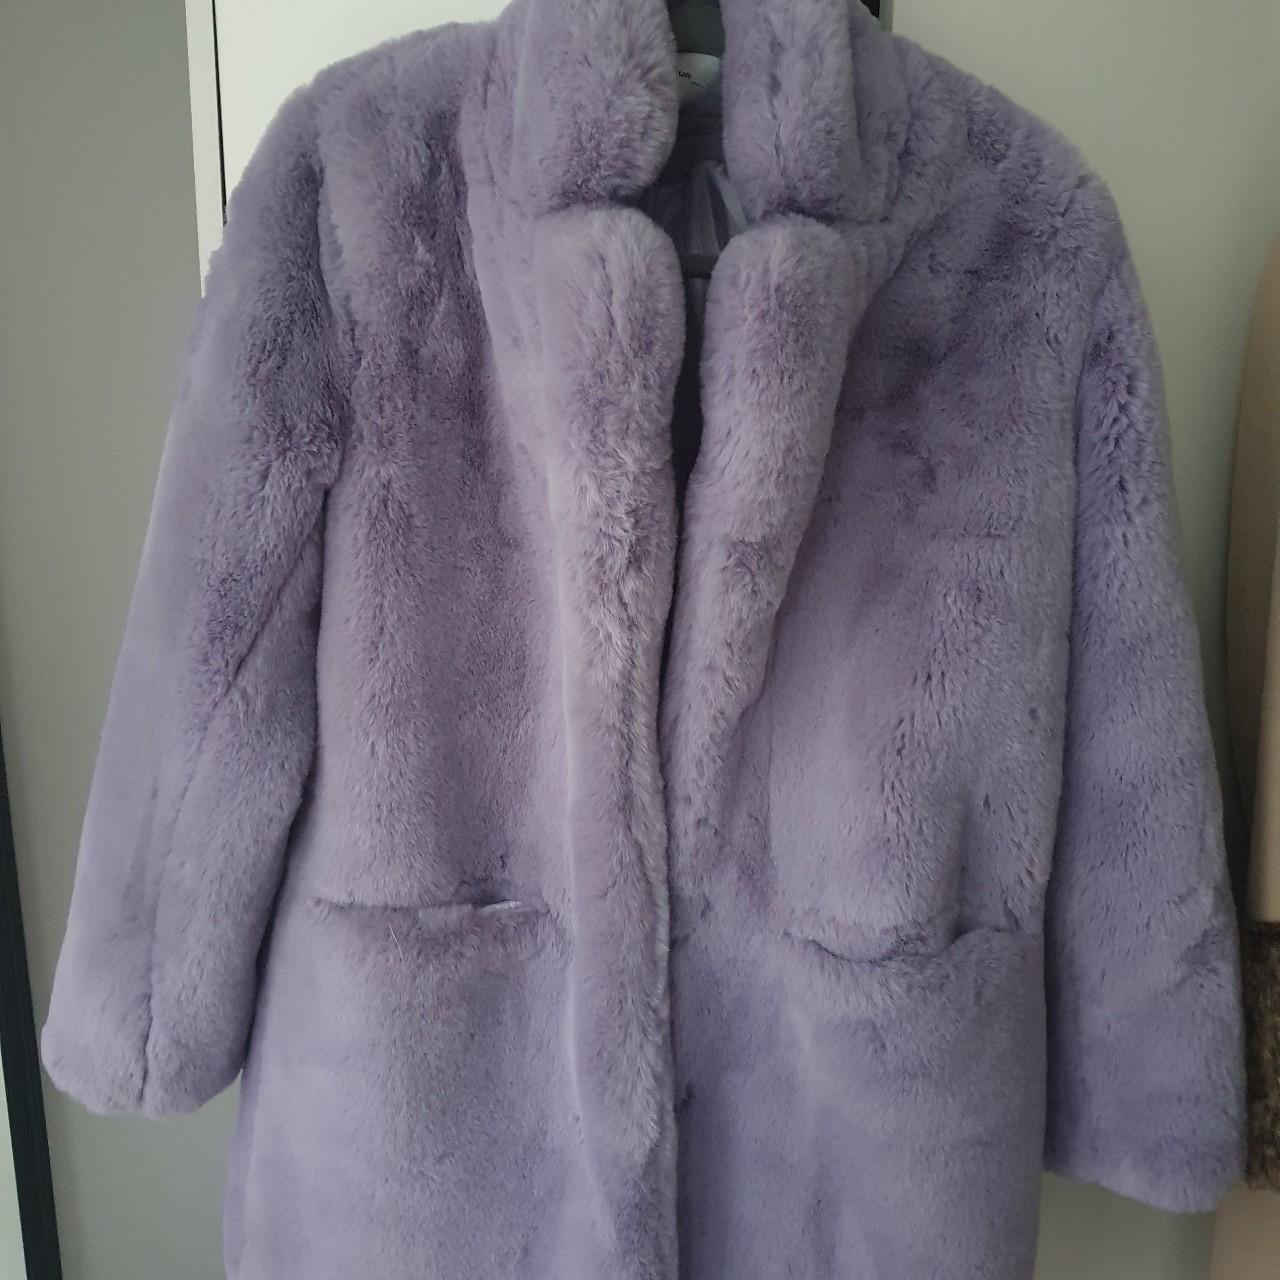 Miss guided never worn lavender fur coat. Perfect... - Depop